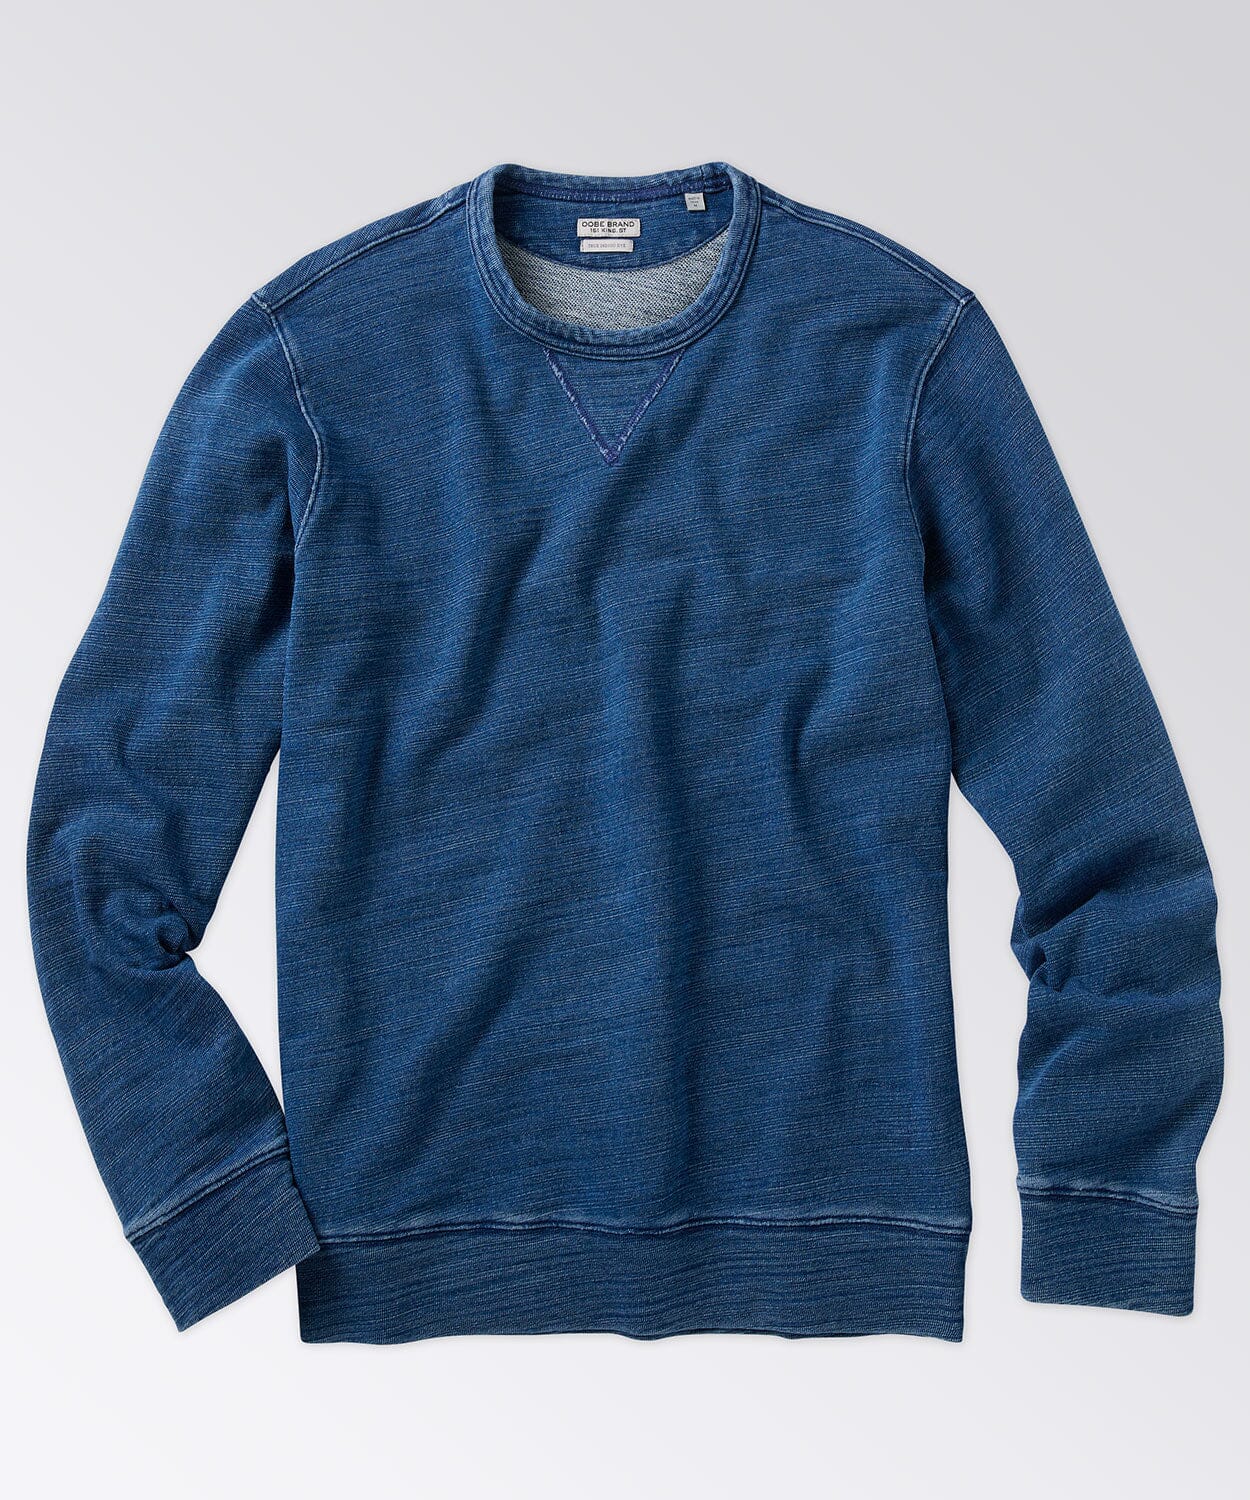 Indigo Garment Dyed Crew Neck Sweatshirt with Slub Texture. 